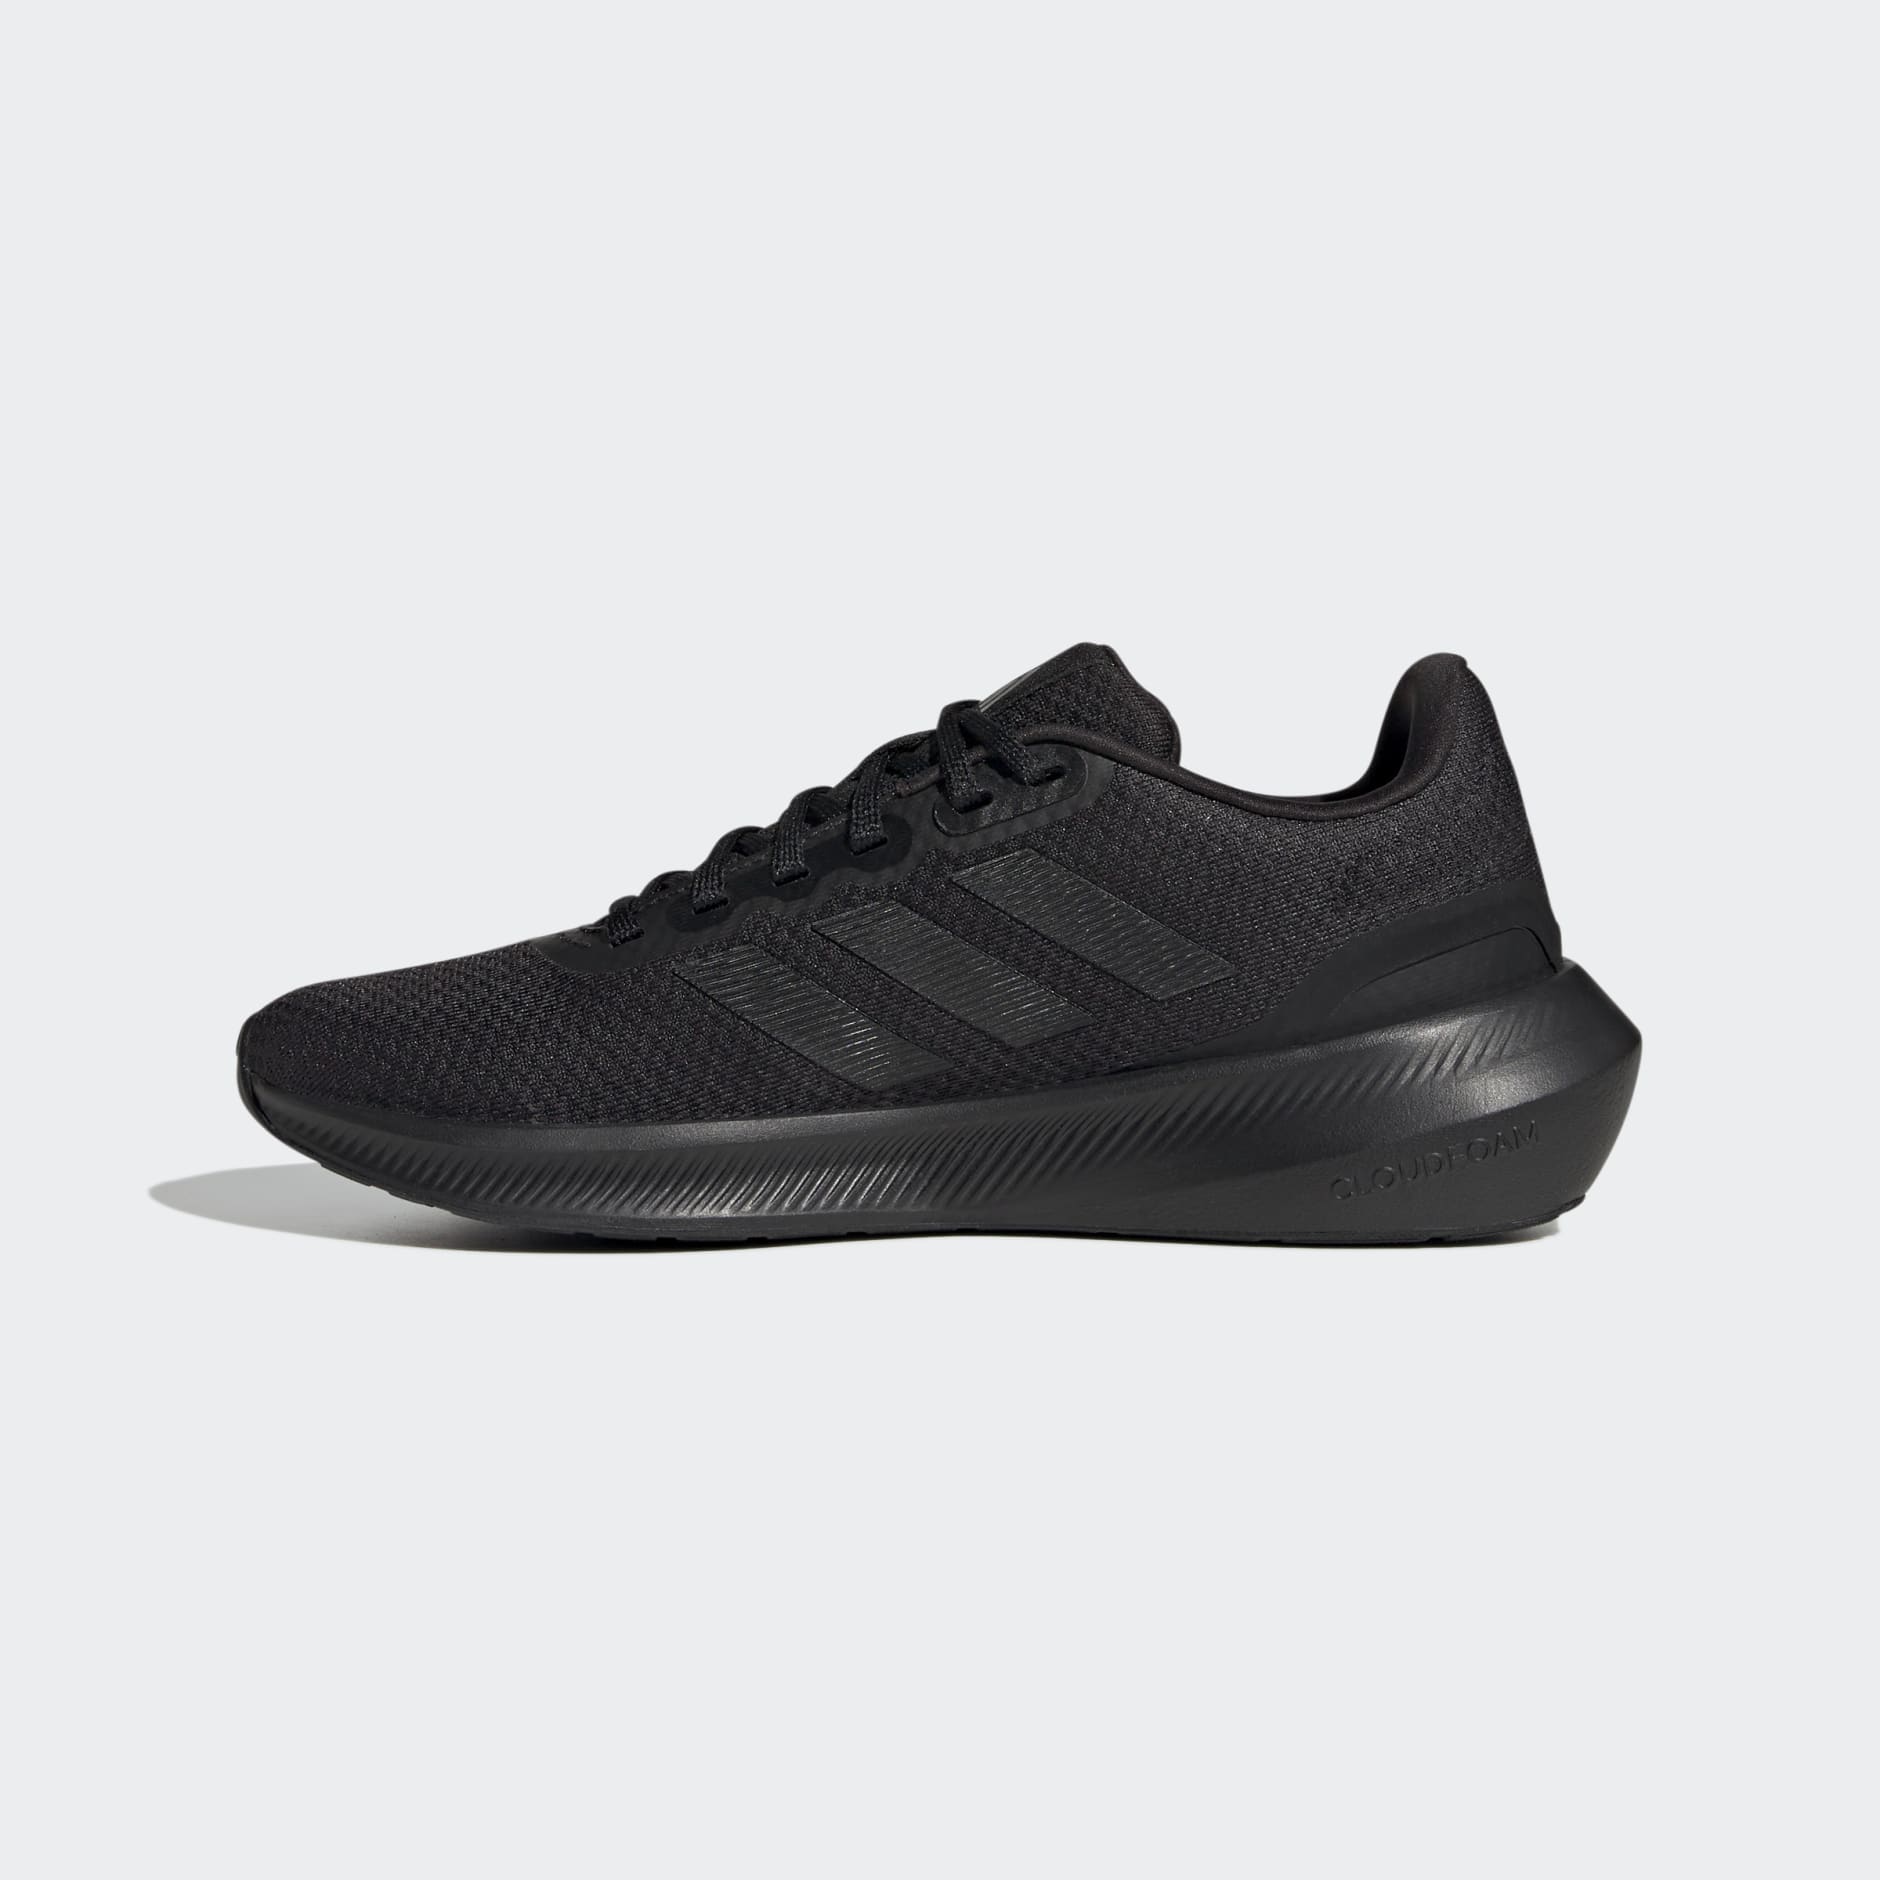 adidas Originals Ozweego sneakers in triple black | ASOS